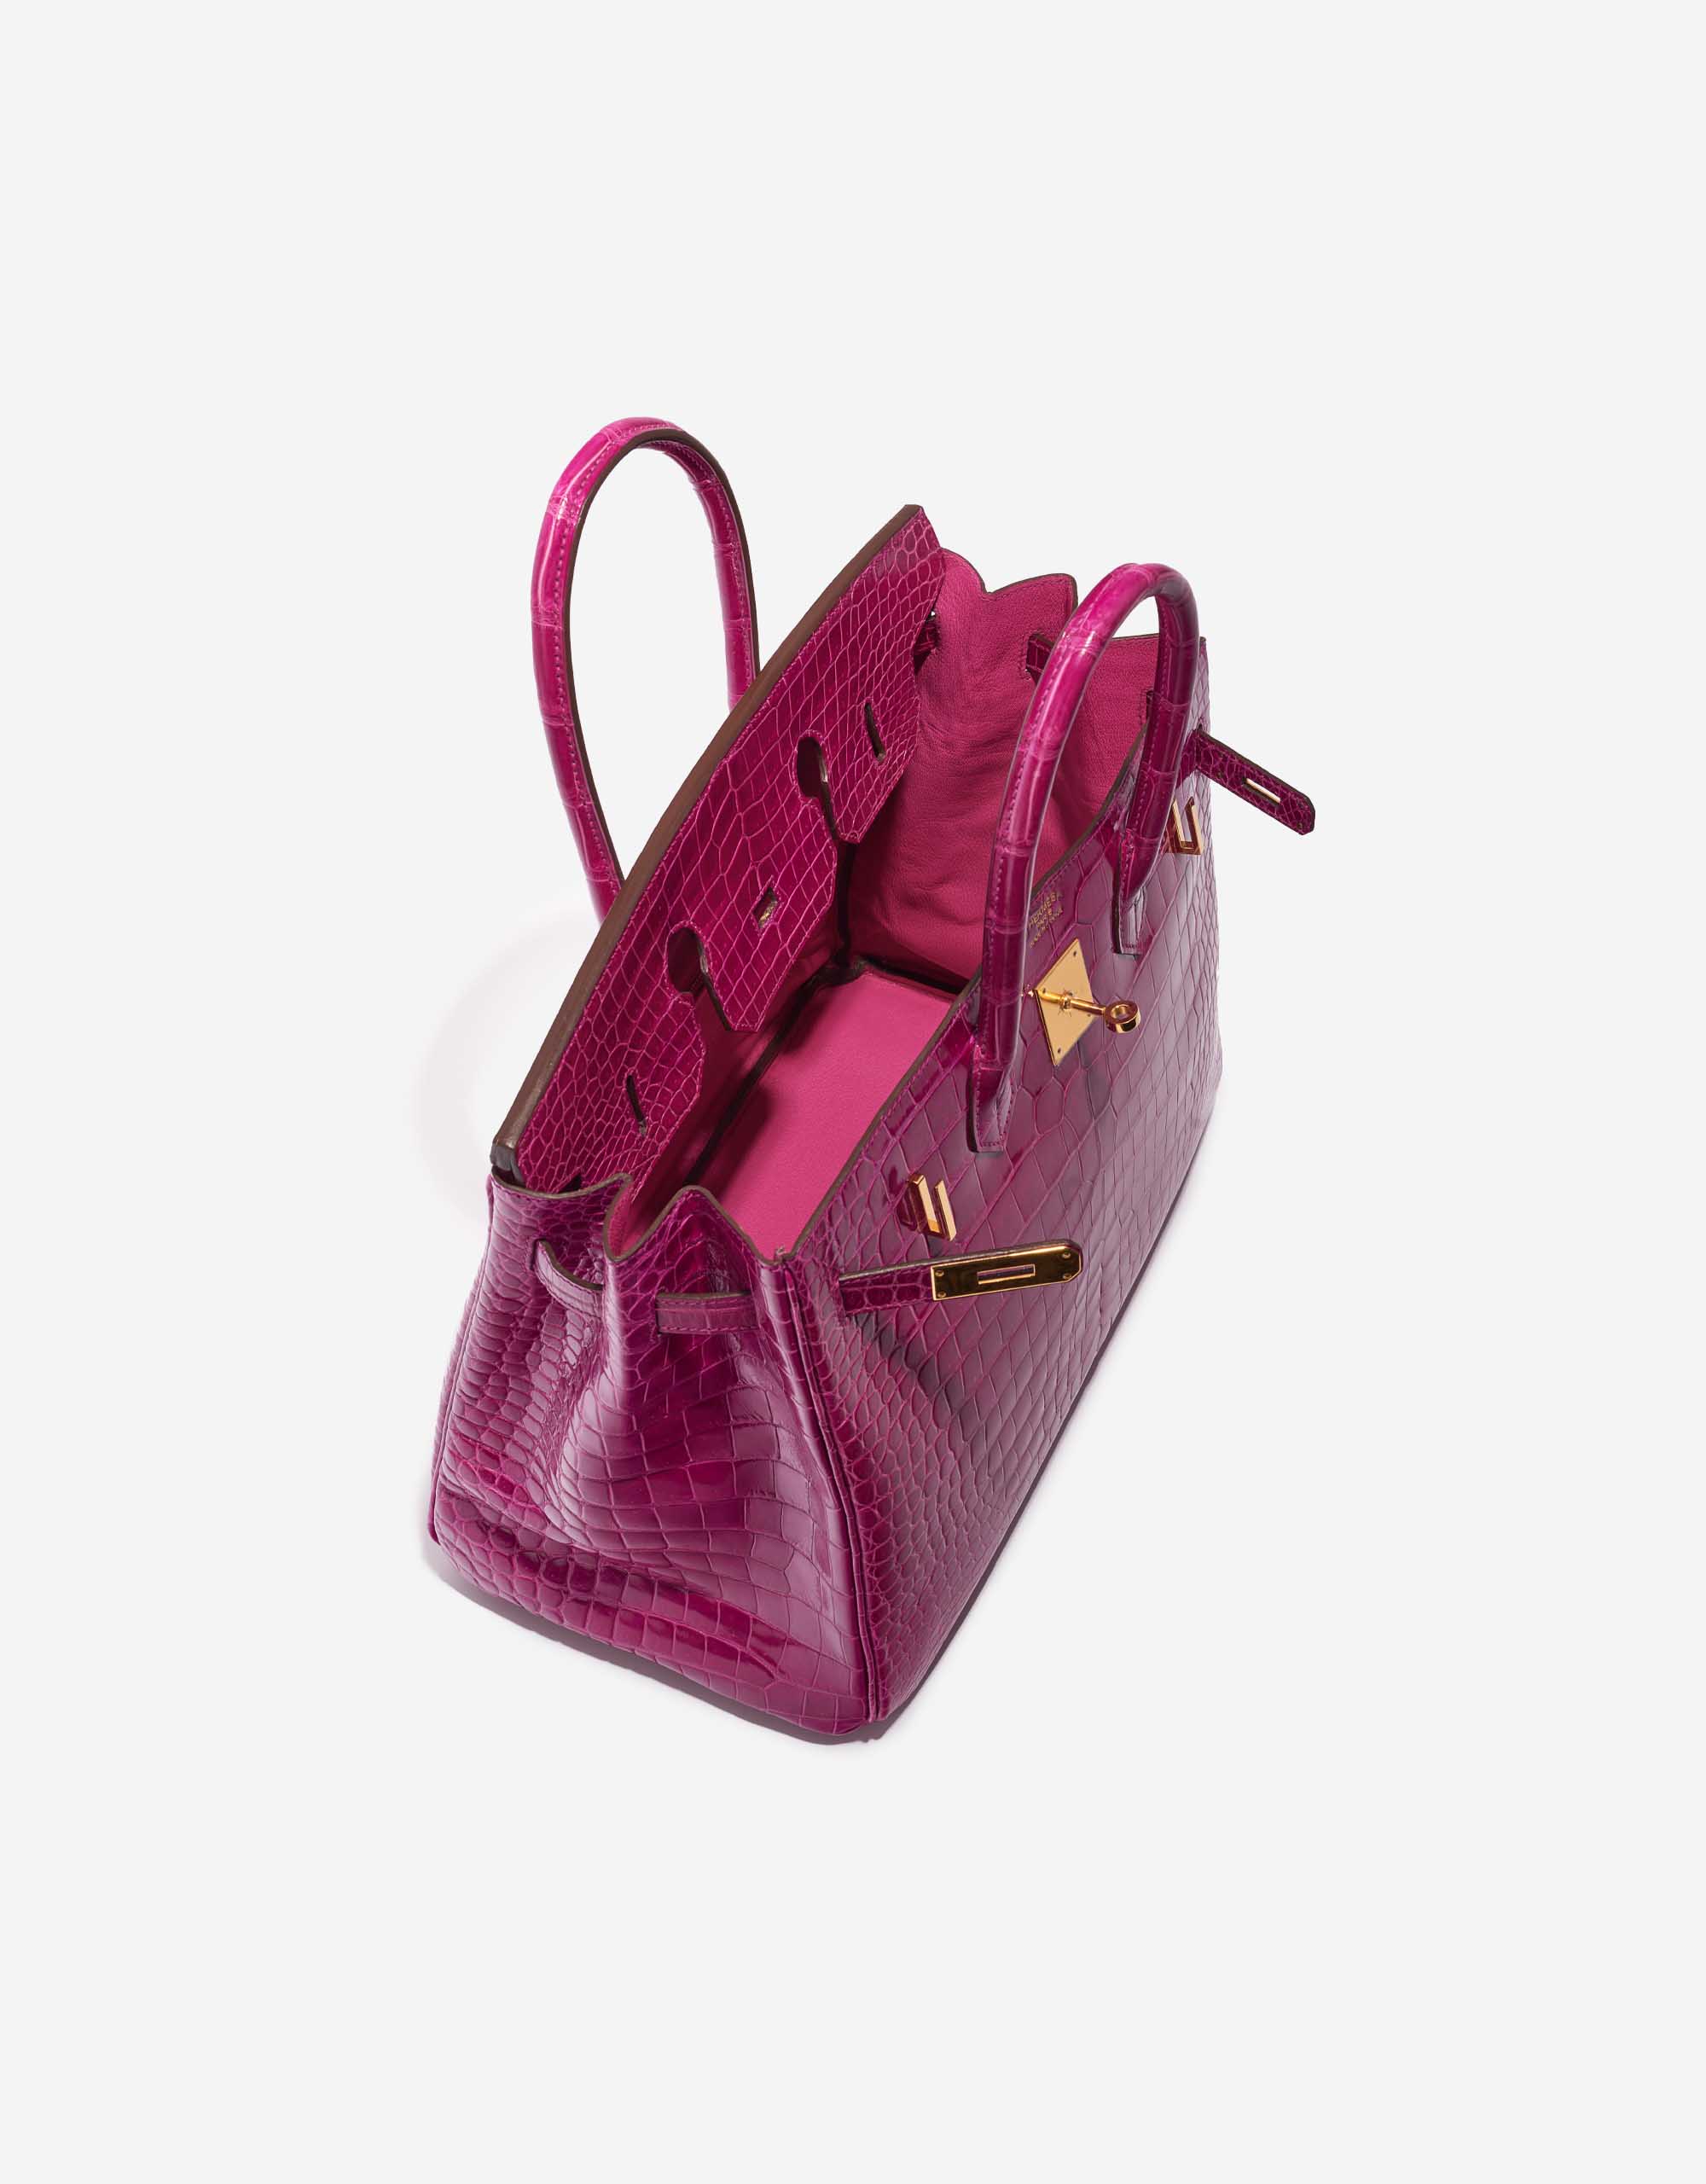 Sac Hermès Birkin 35 Porosus Crocodile Rose Scheherazade Pink Inside | Vendez votre sac de créateur sur Saclab.com